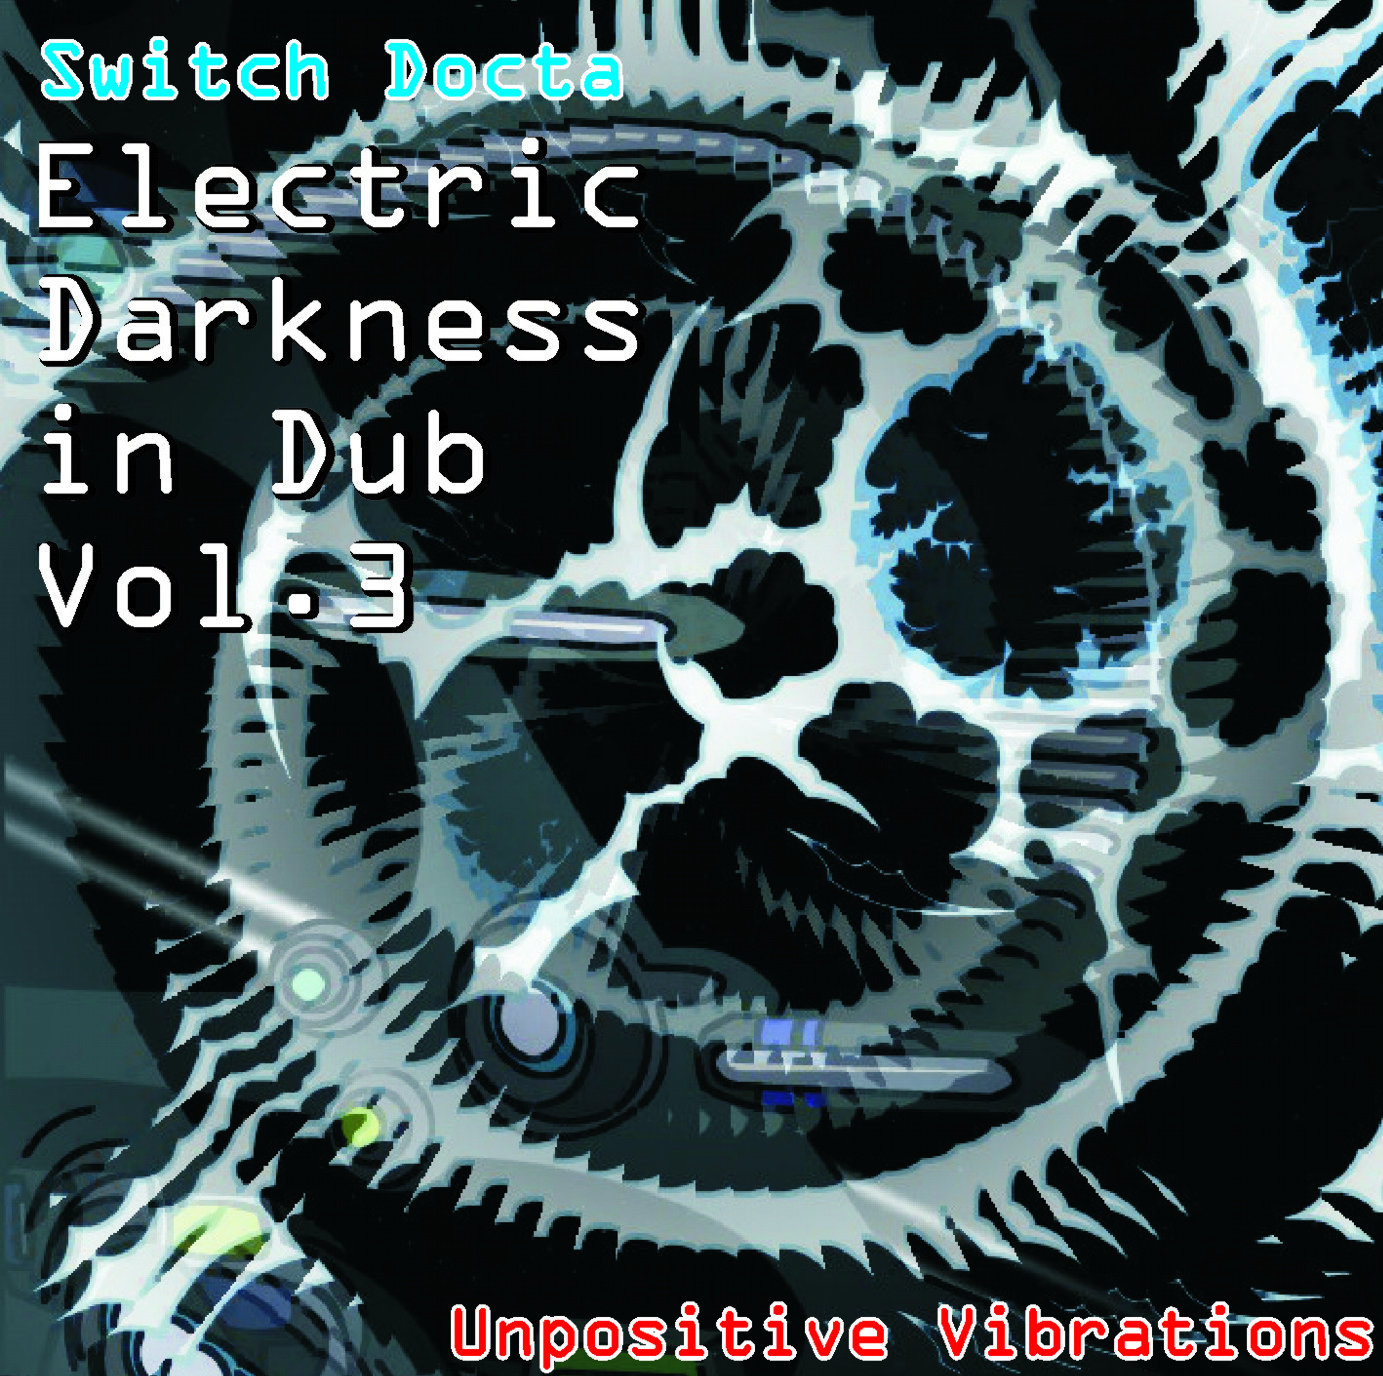 Electric Darkness in Dub Vol.3 (Unpositive Vibrations)